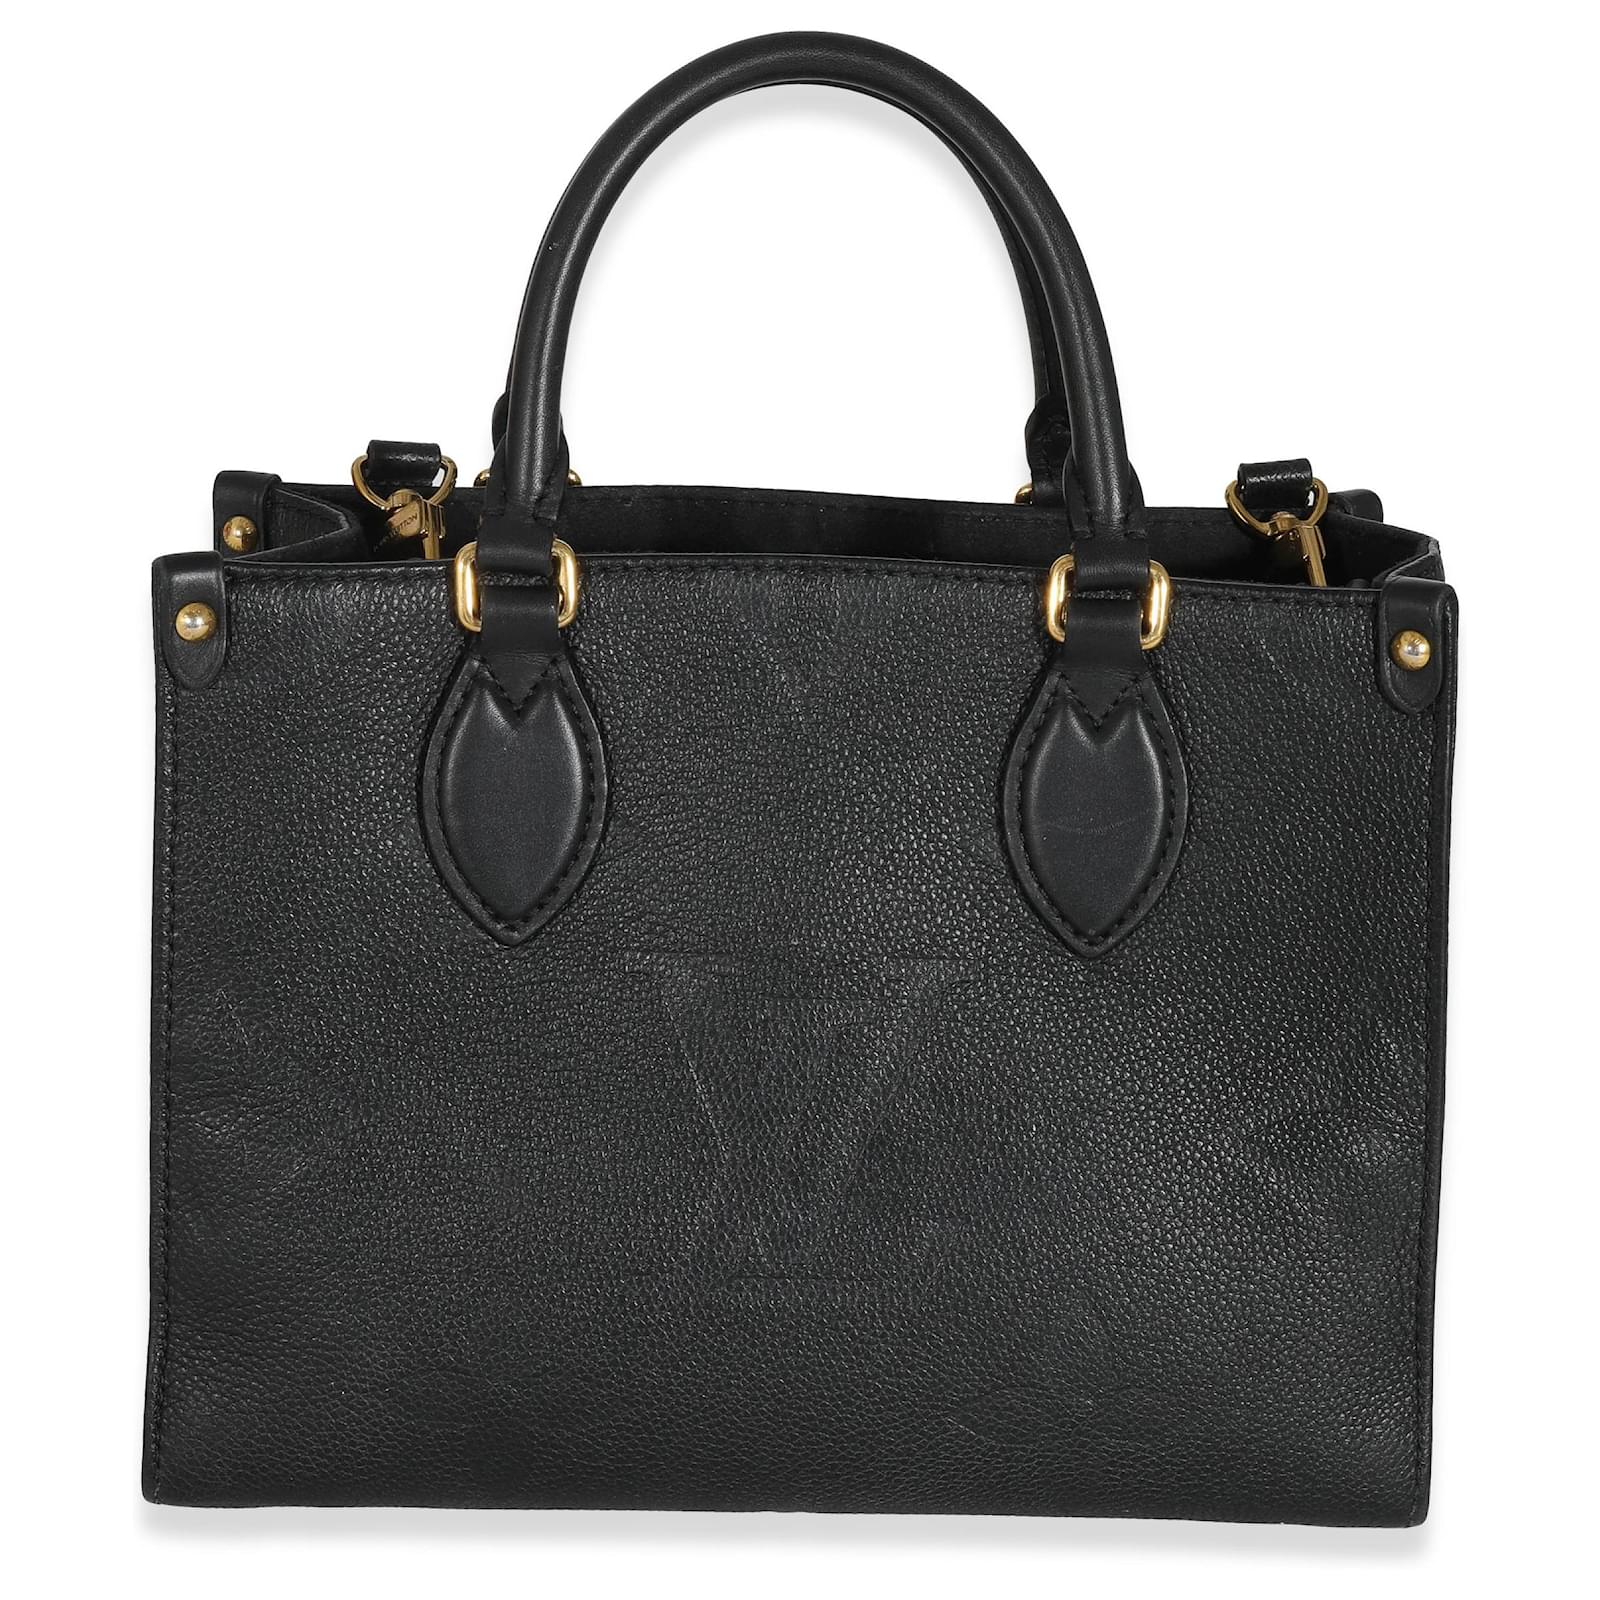 Louis Vuitton - Carryall Pm Empreinte